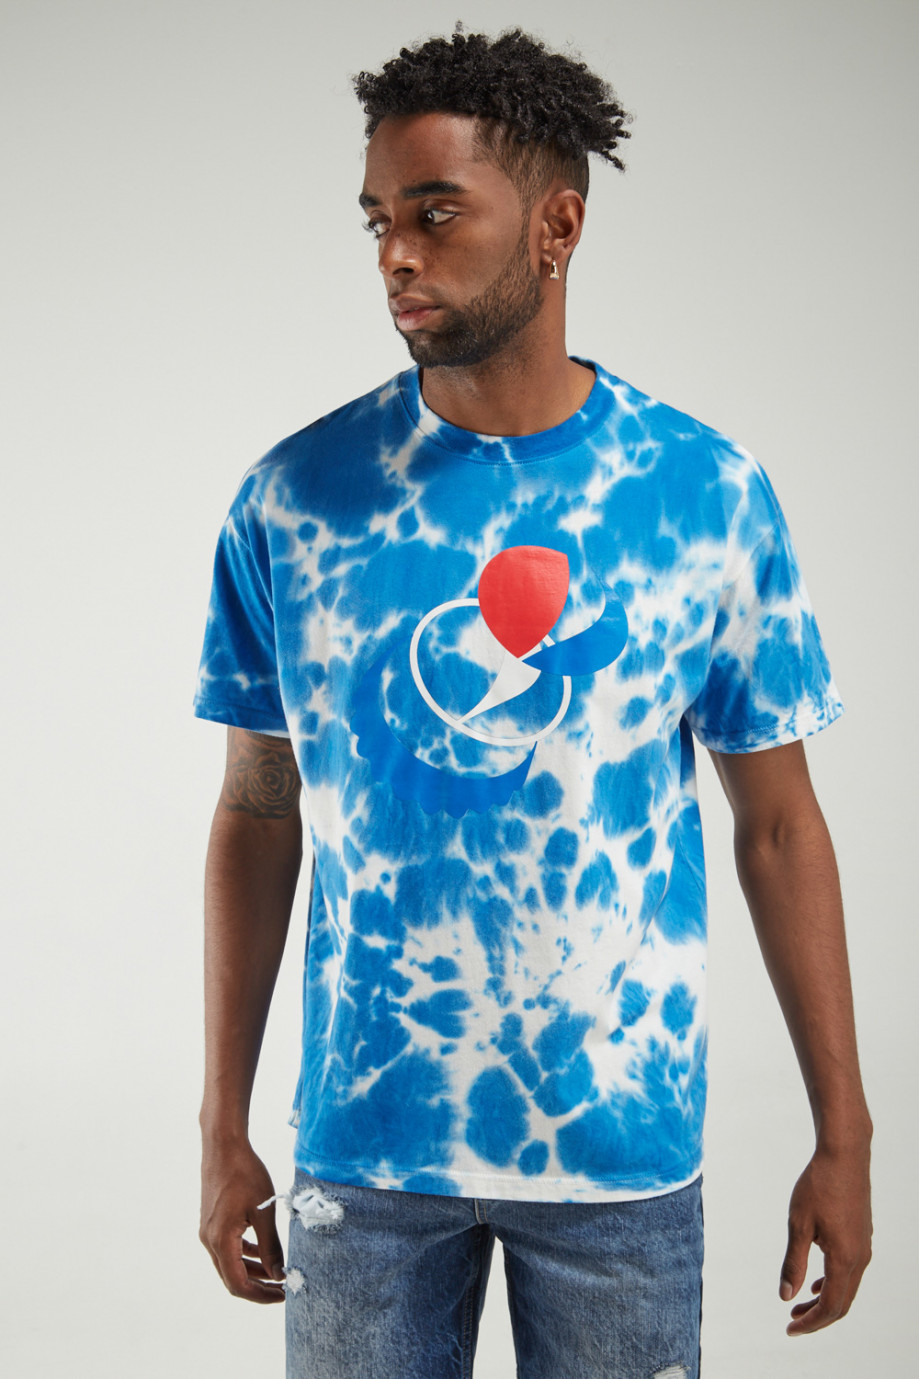 Camiseta preteñida con manga corta y estampado de Pepsi.